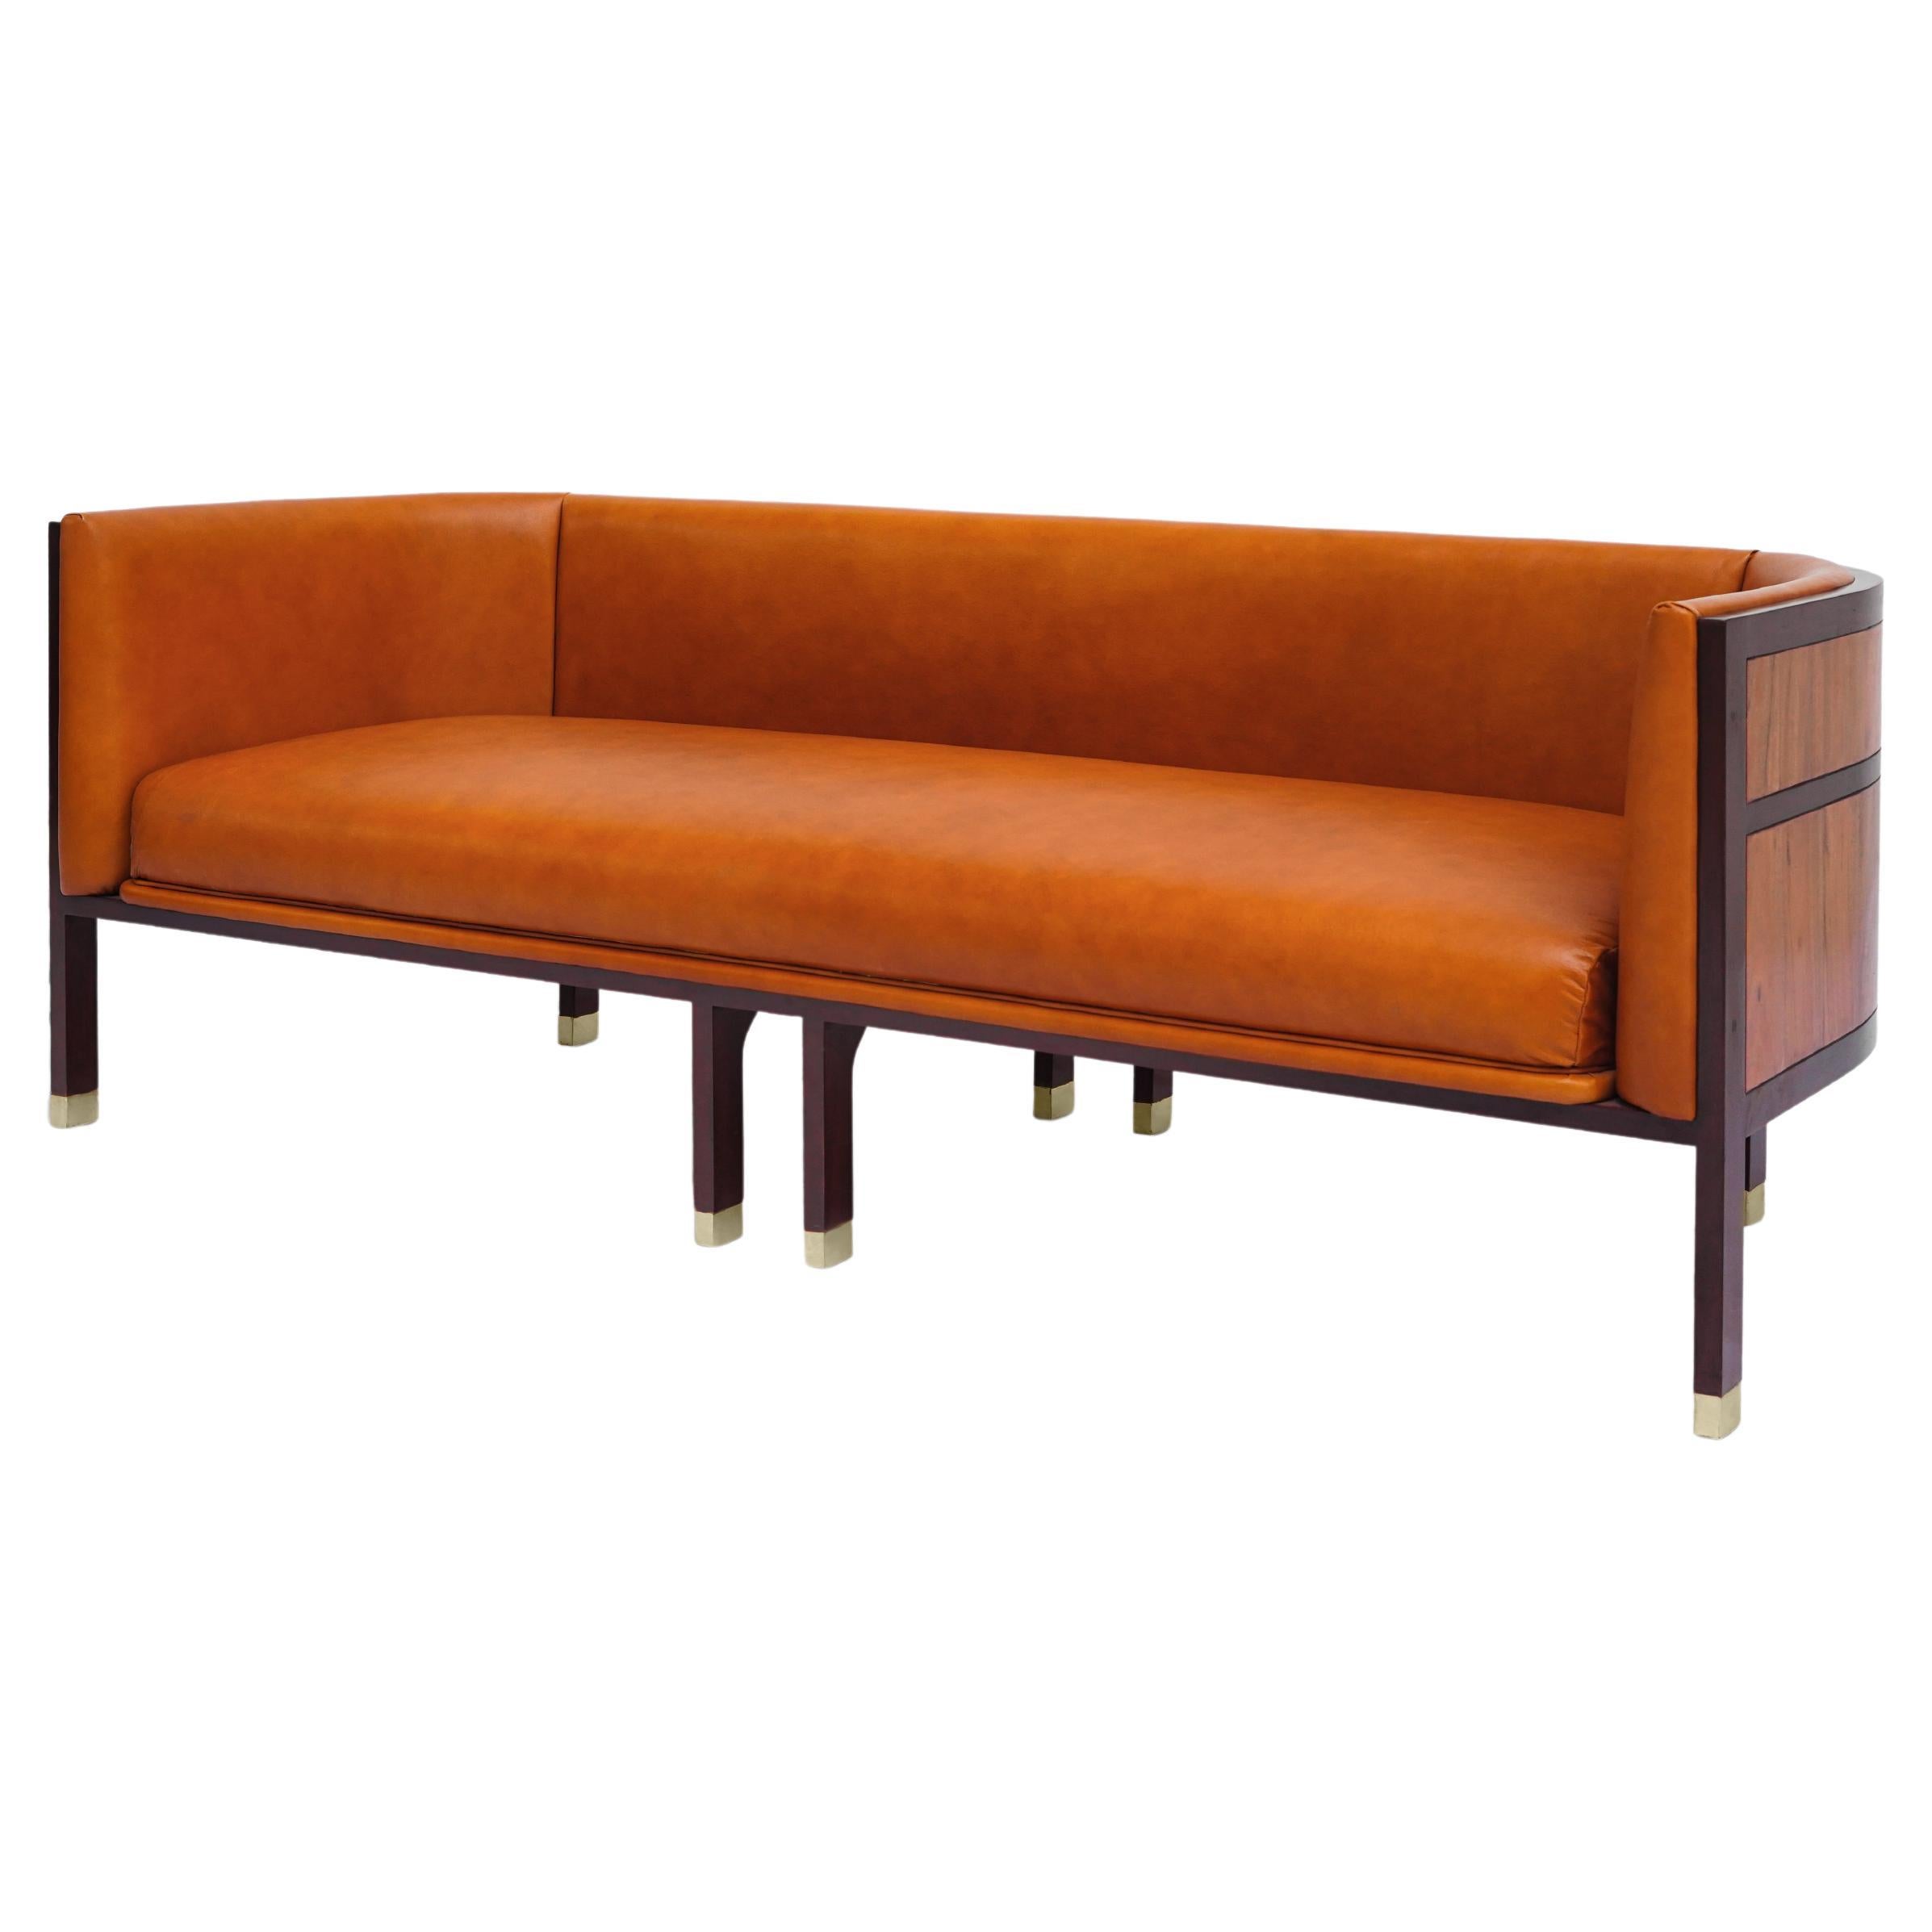 Moderne The Moderns sofa, Barrel sofa, round back chair, bold, modern, walnut wood en vente